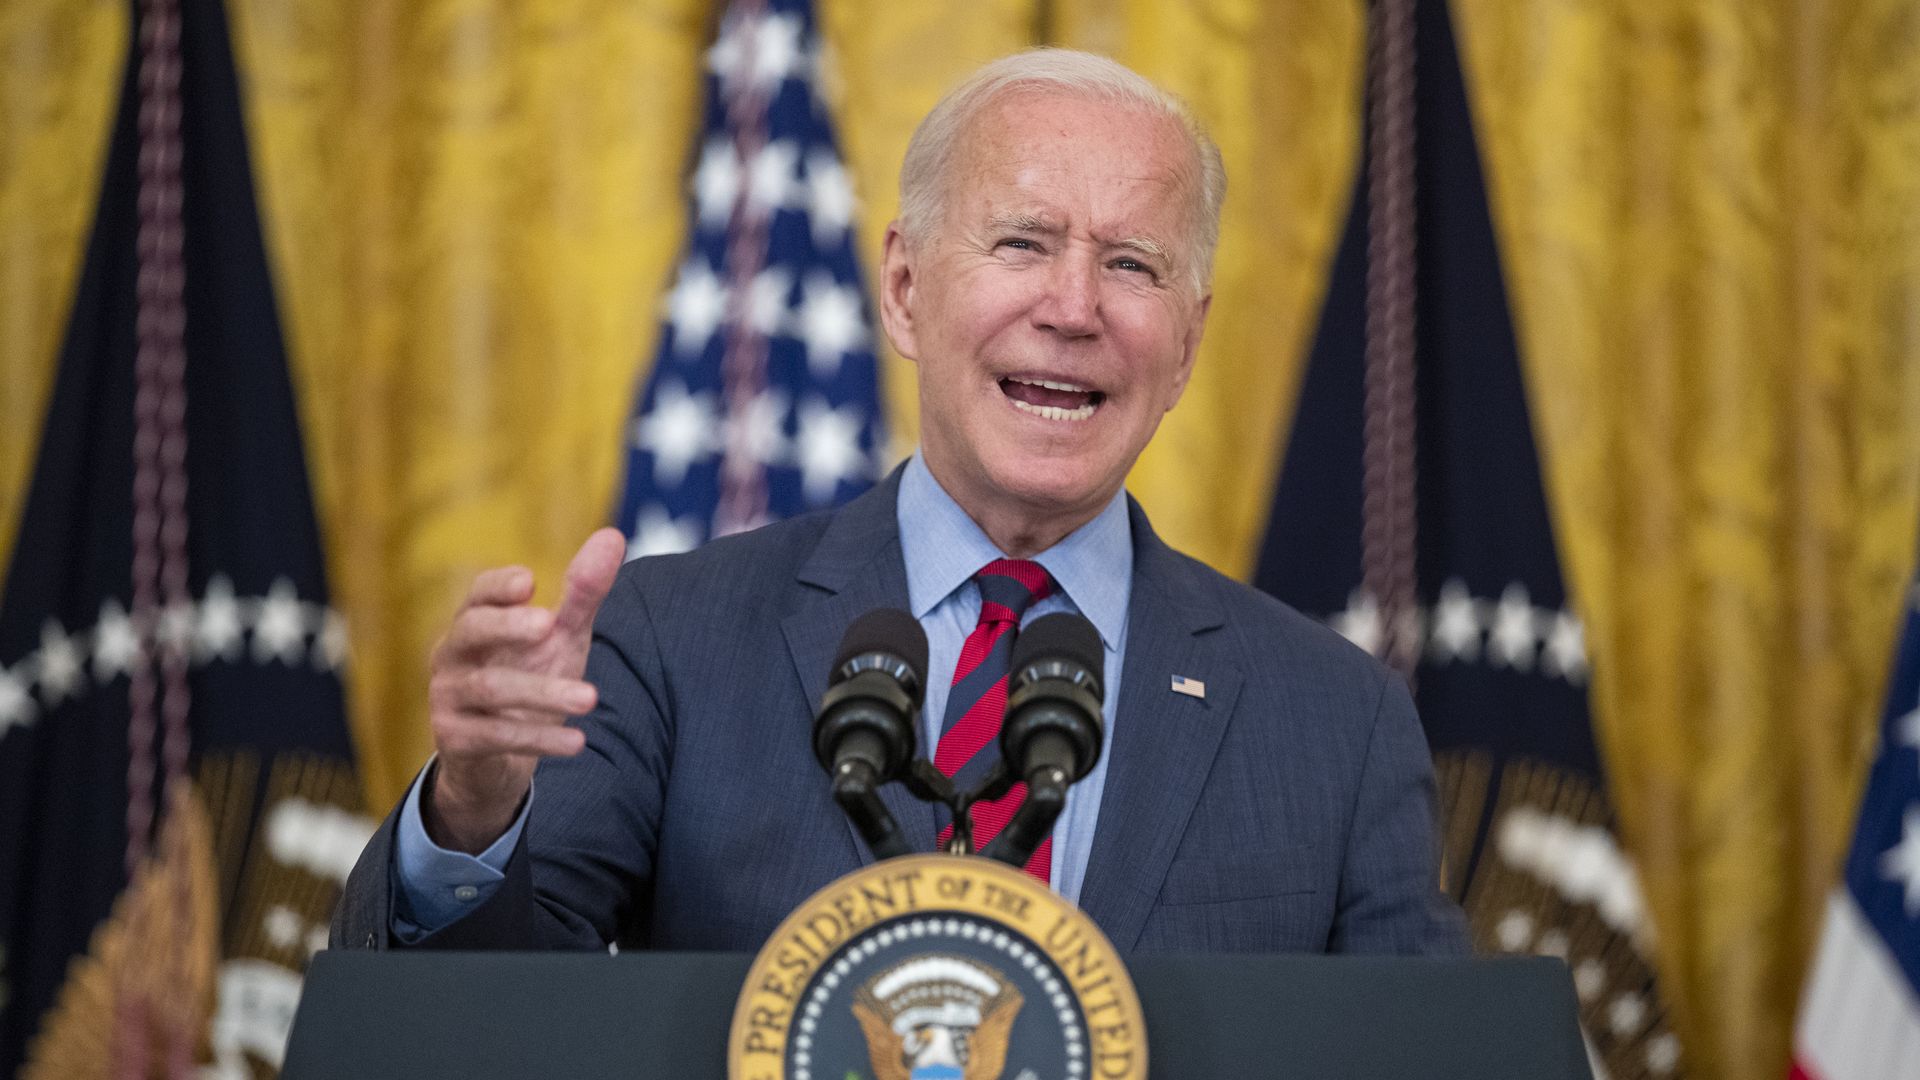 President Joe Biden speaks in the East Room of the White House in Washington, D.C., U.S., on Tuesday, Aug. 3